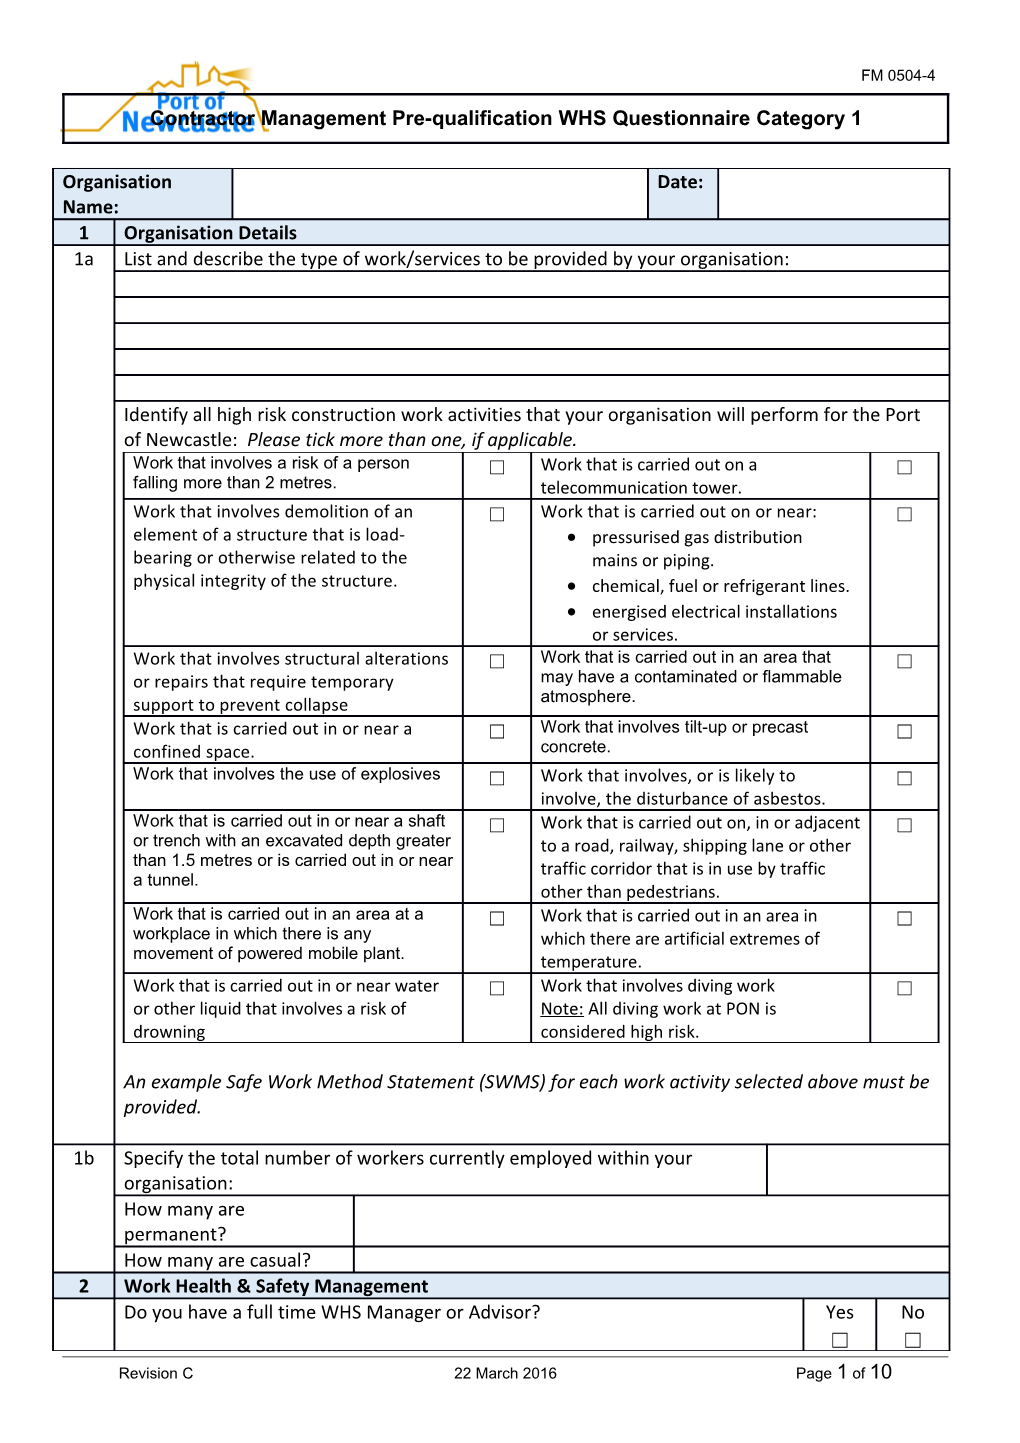 Contractor Management Pre-Qualification WHS Questionnaire Category 1